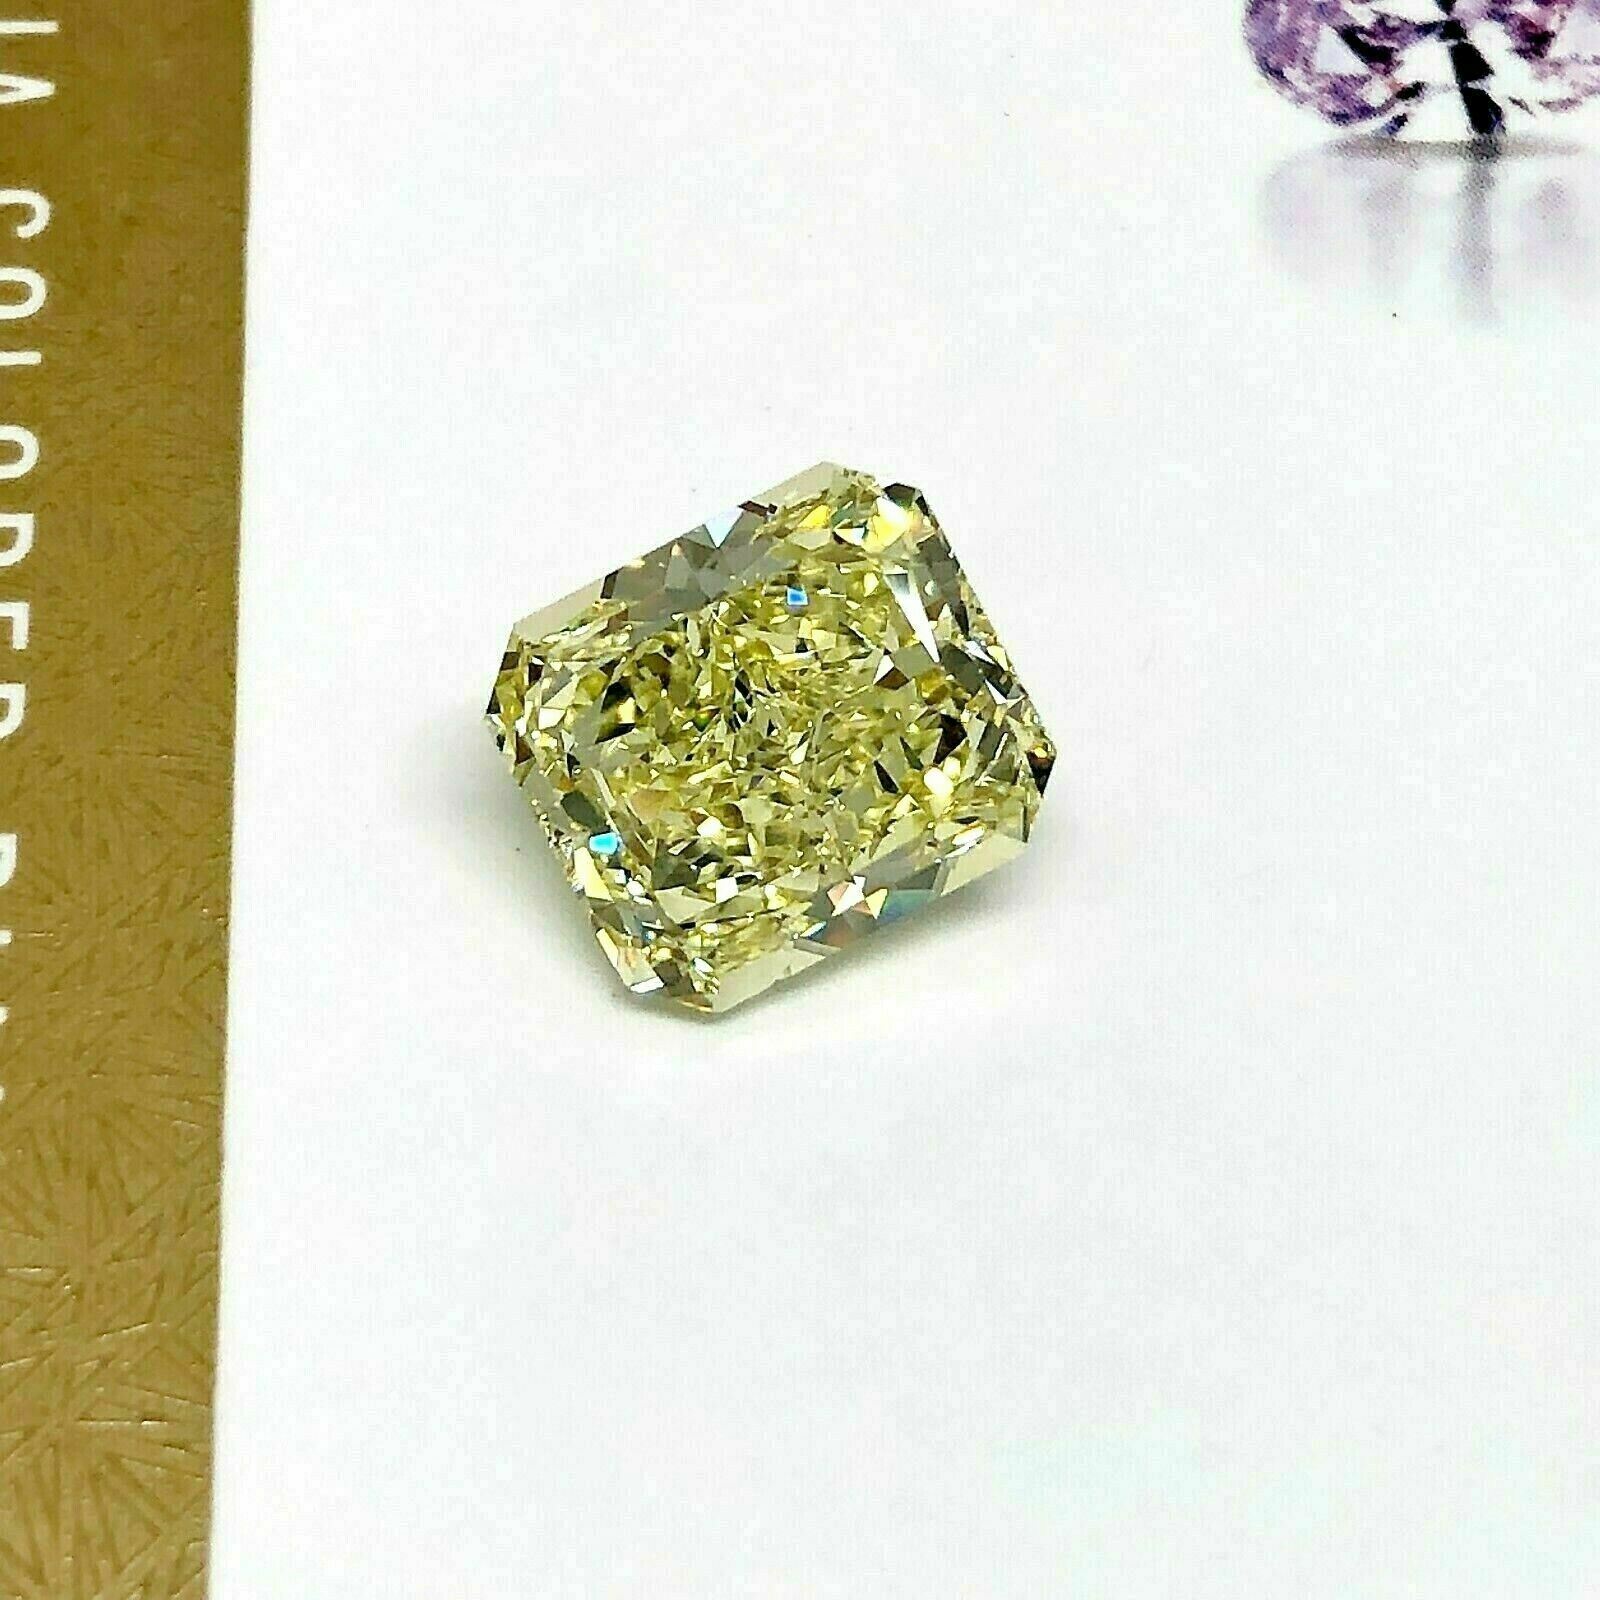 Loose GIA Diamond - 7.59 Carats Fancy Yellow GIA VVS1 Radiant Cut Diamond